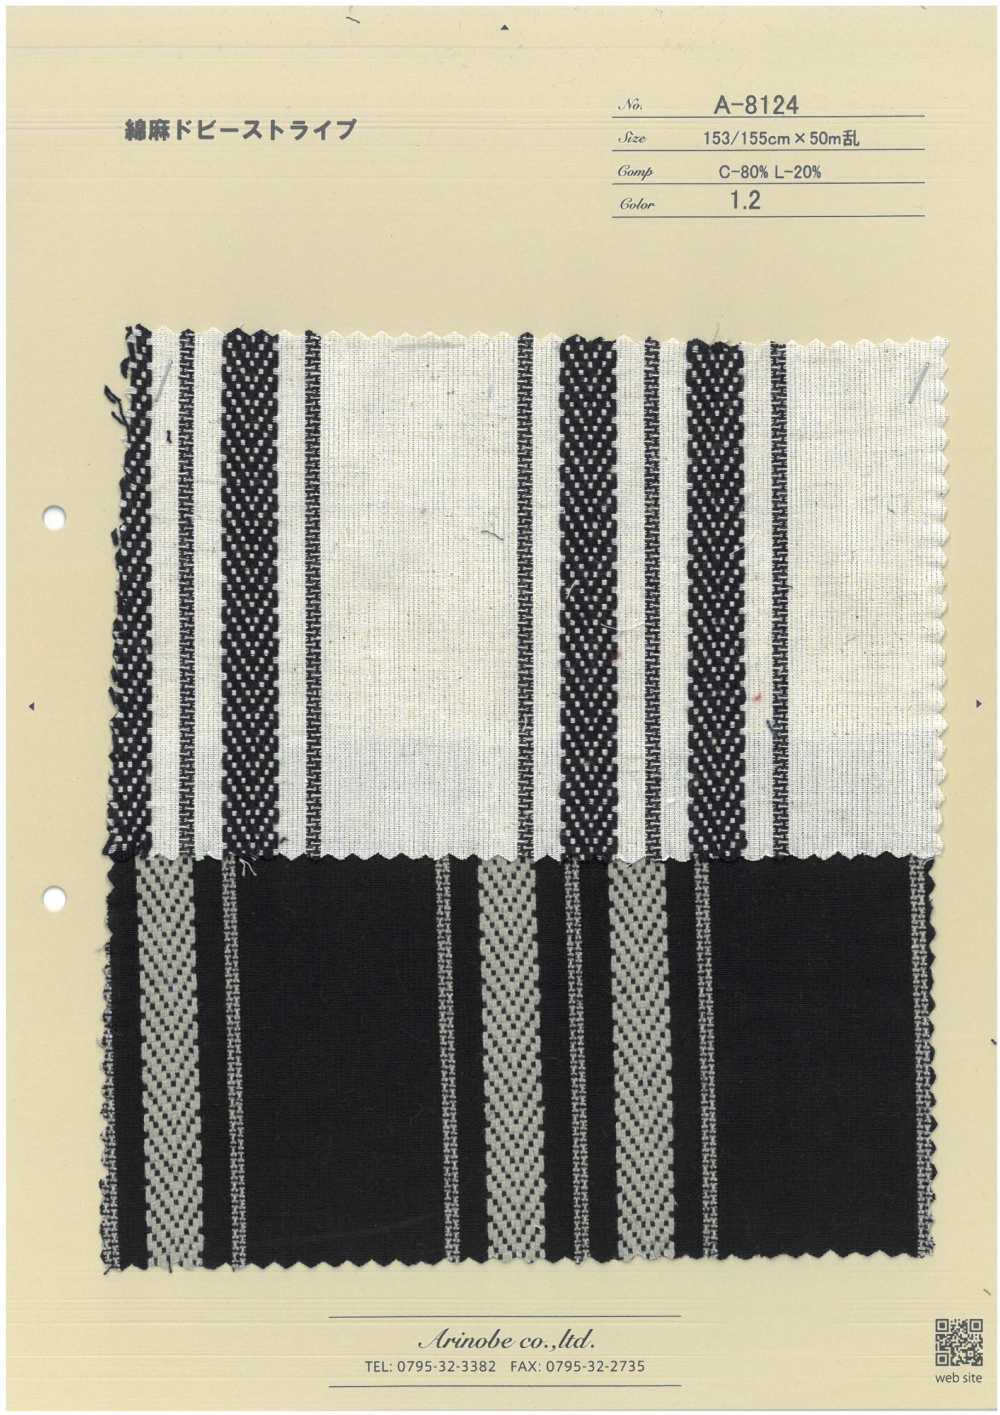 A-8124 Vải Sợi Gai Cotton Kẻ Sọc Dobby ARINOBE CO., LTD.